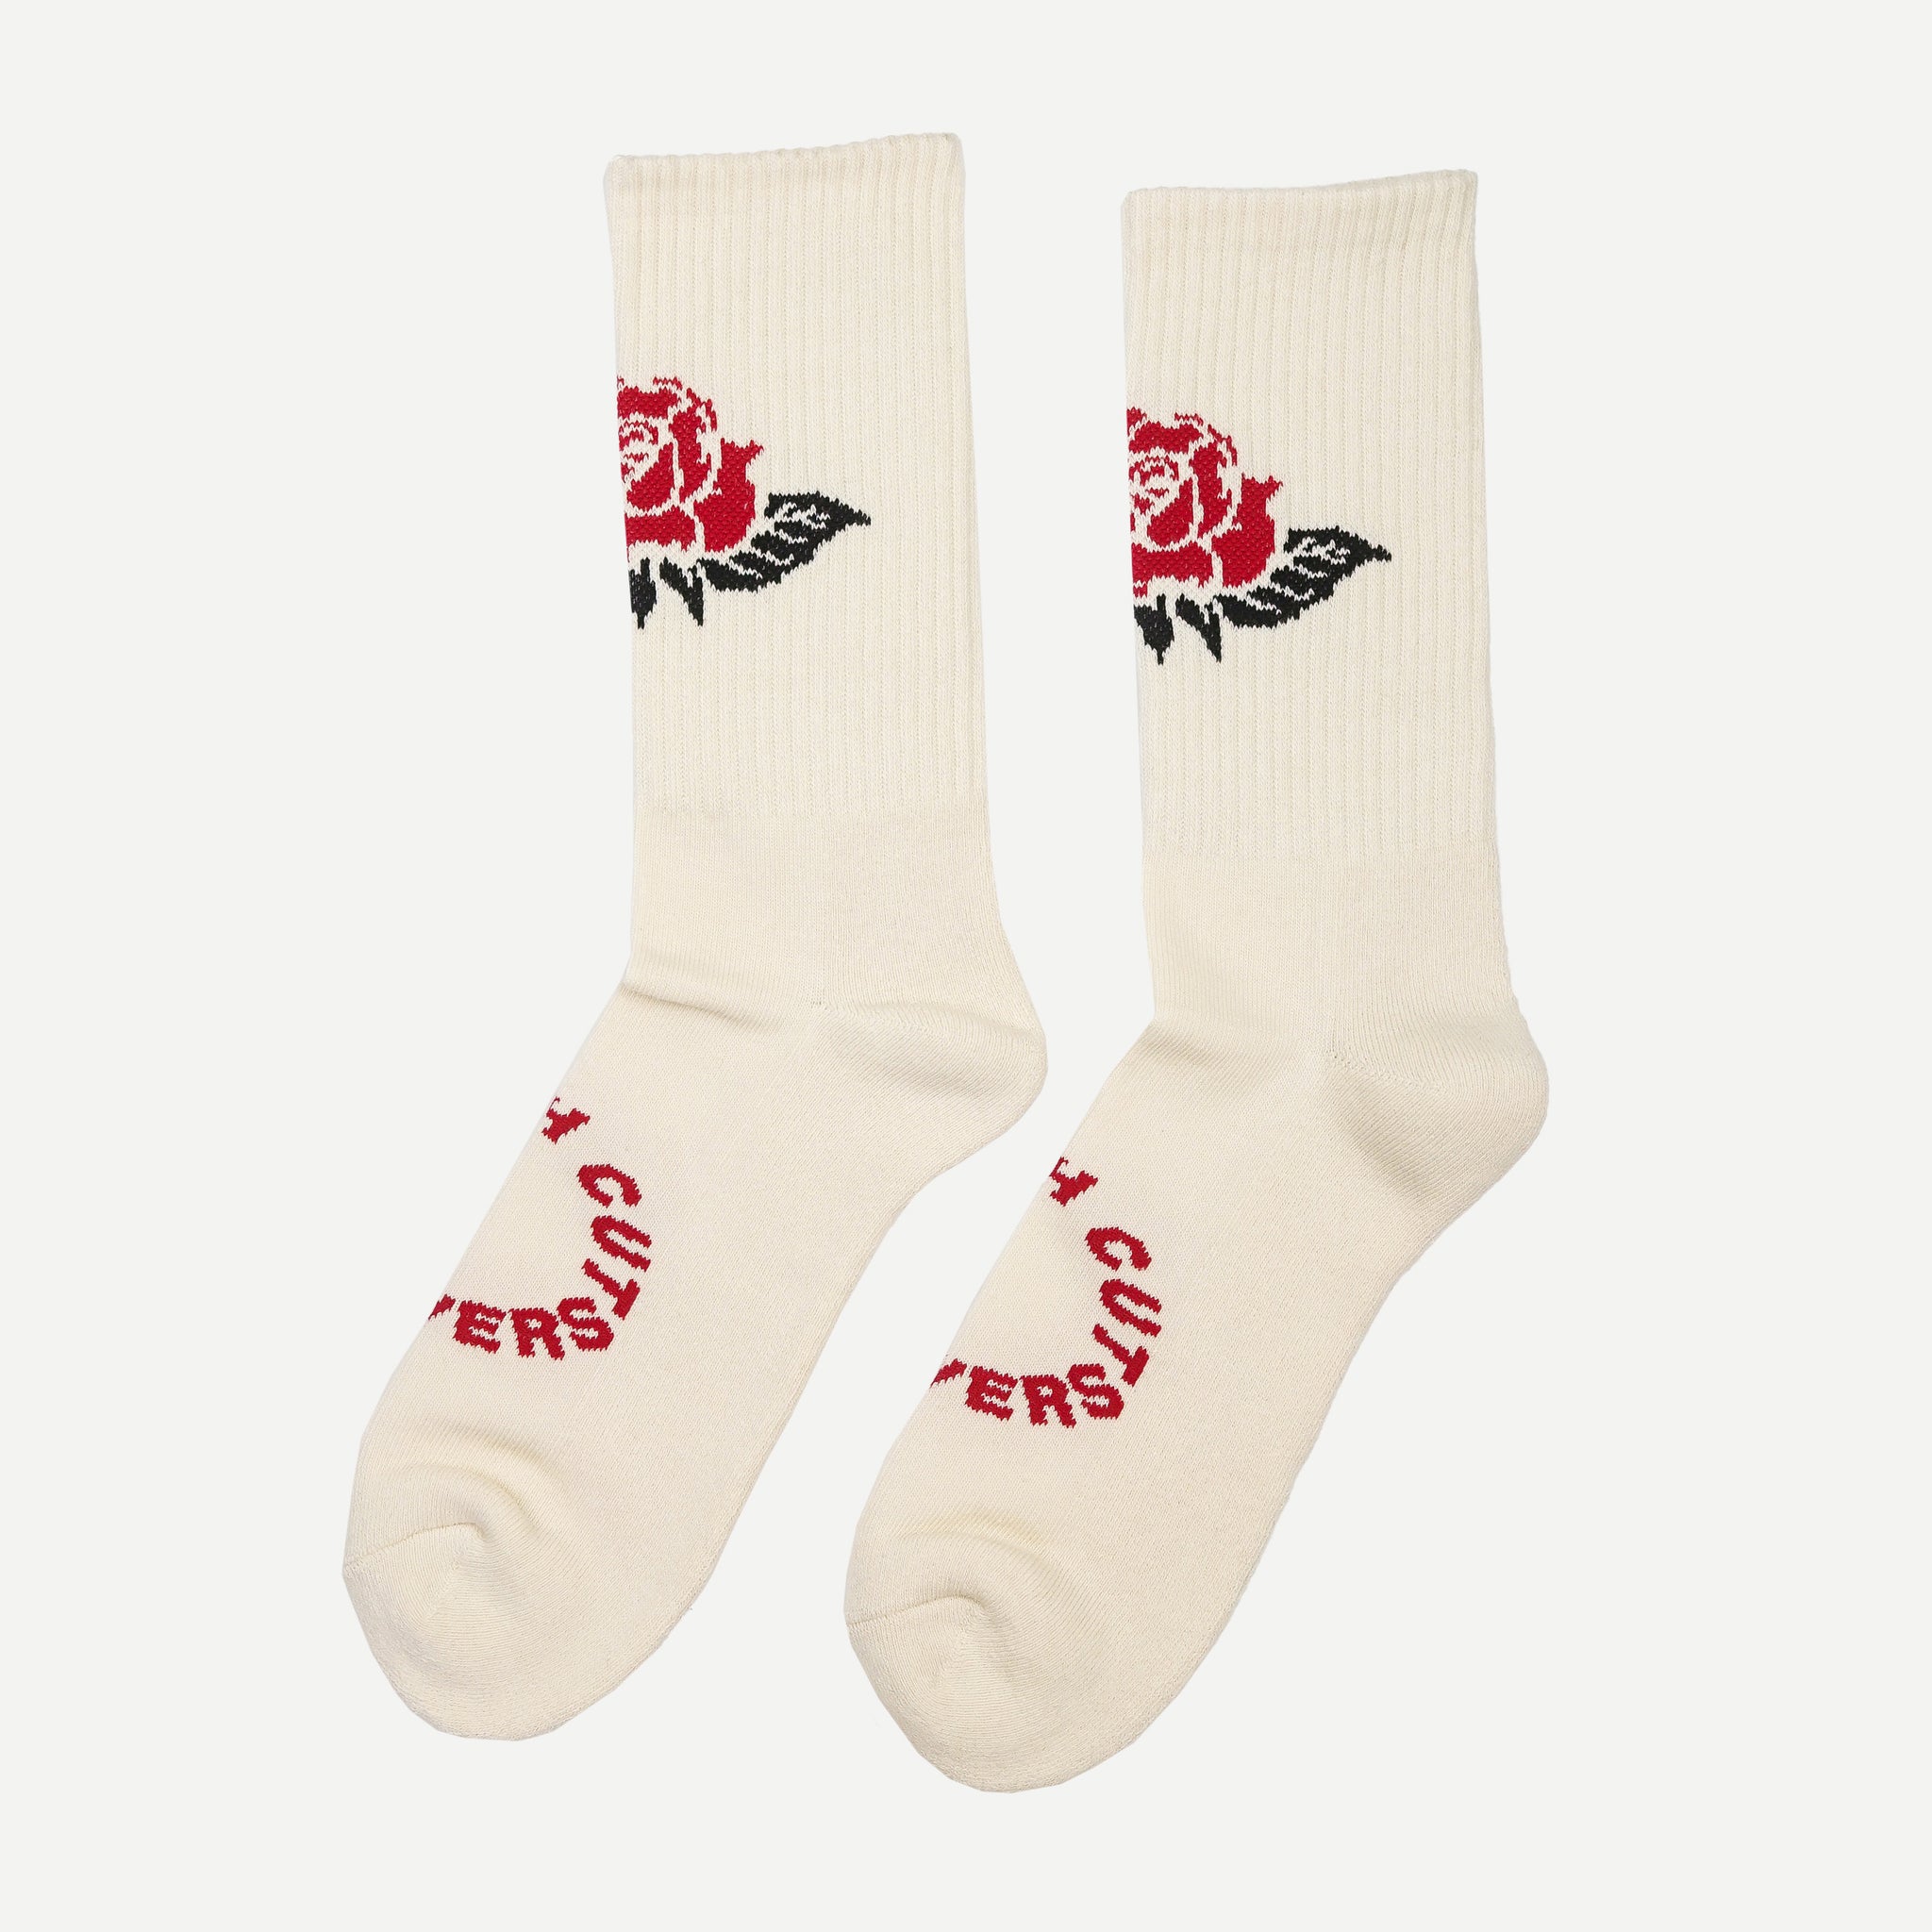 One Rose Socks - Blazers